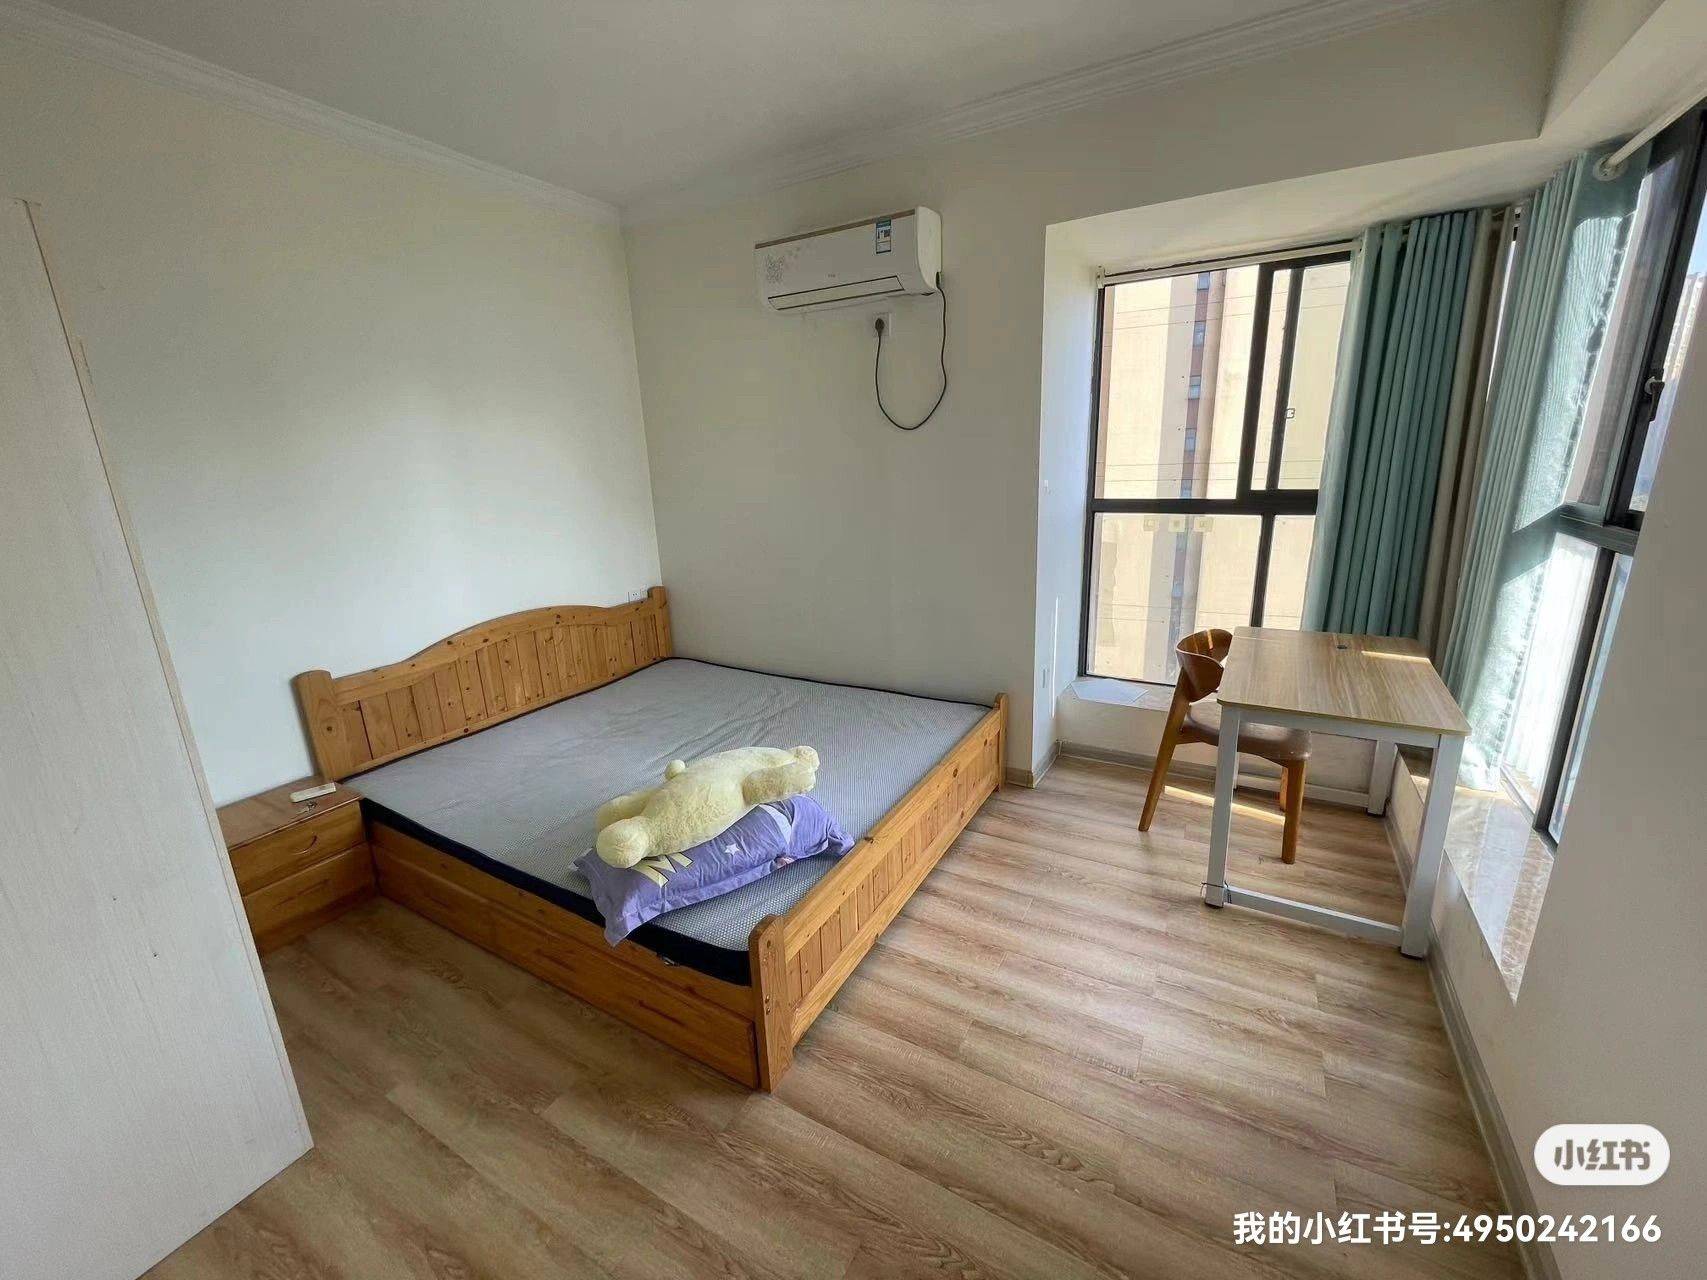 Changsha-Yuelu-Cozy Home,Clean&Comfy